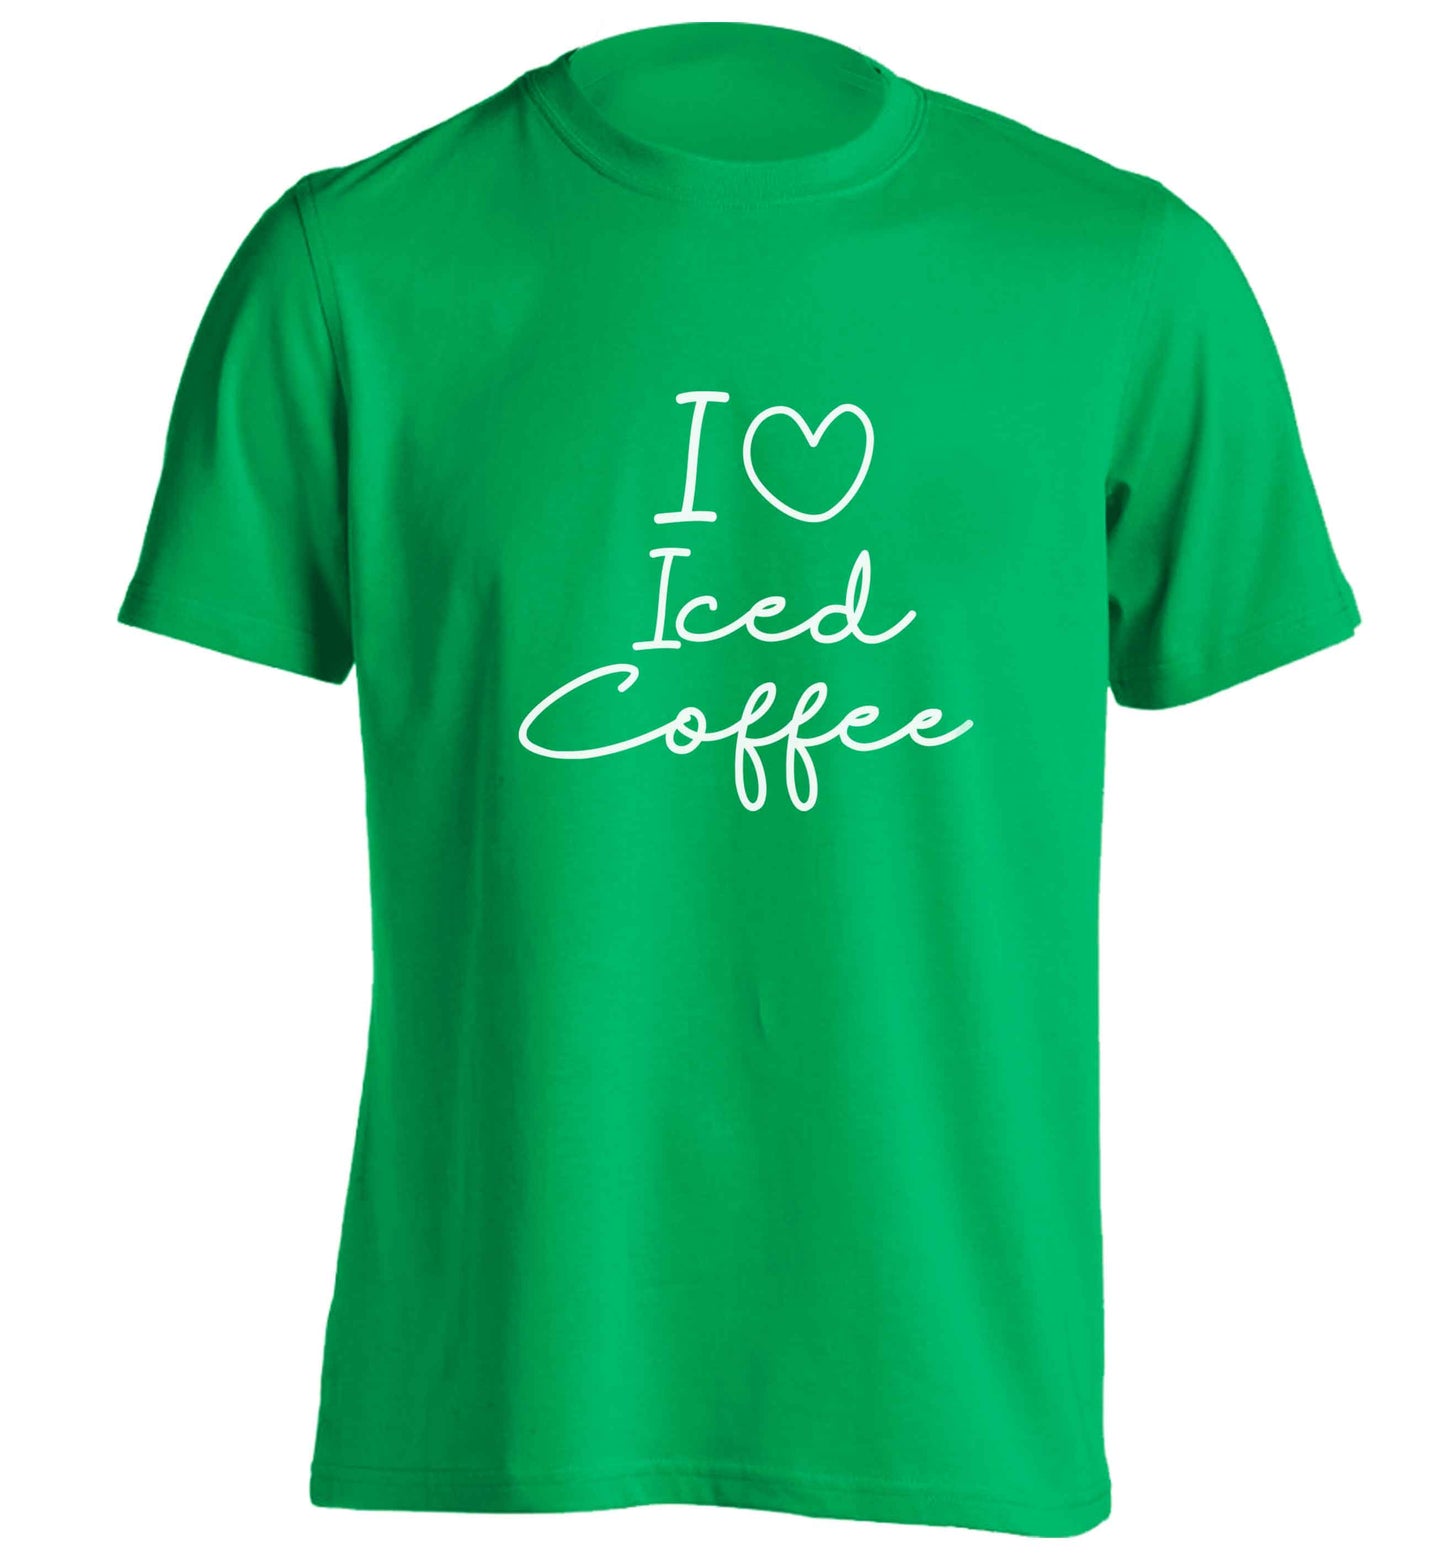 I love iced coffee adults unisex green Tshirt 2XL